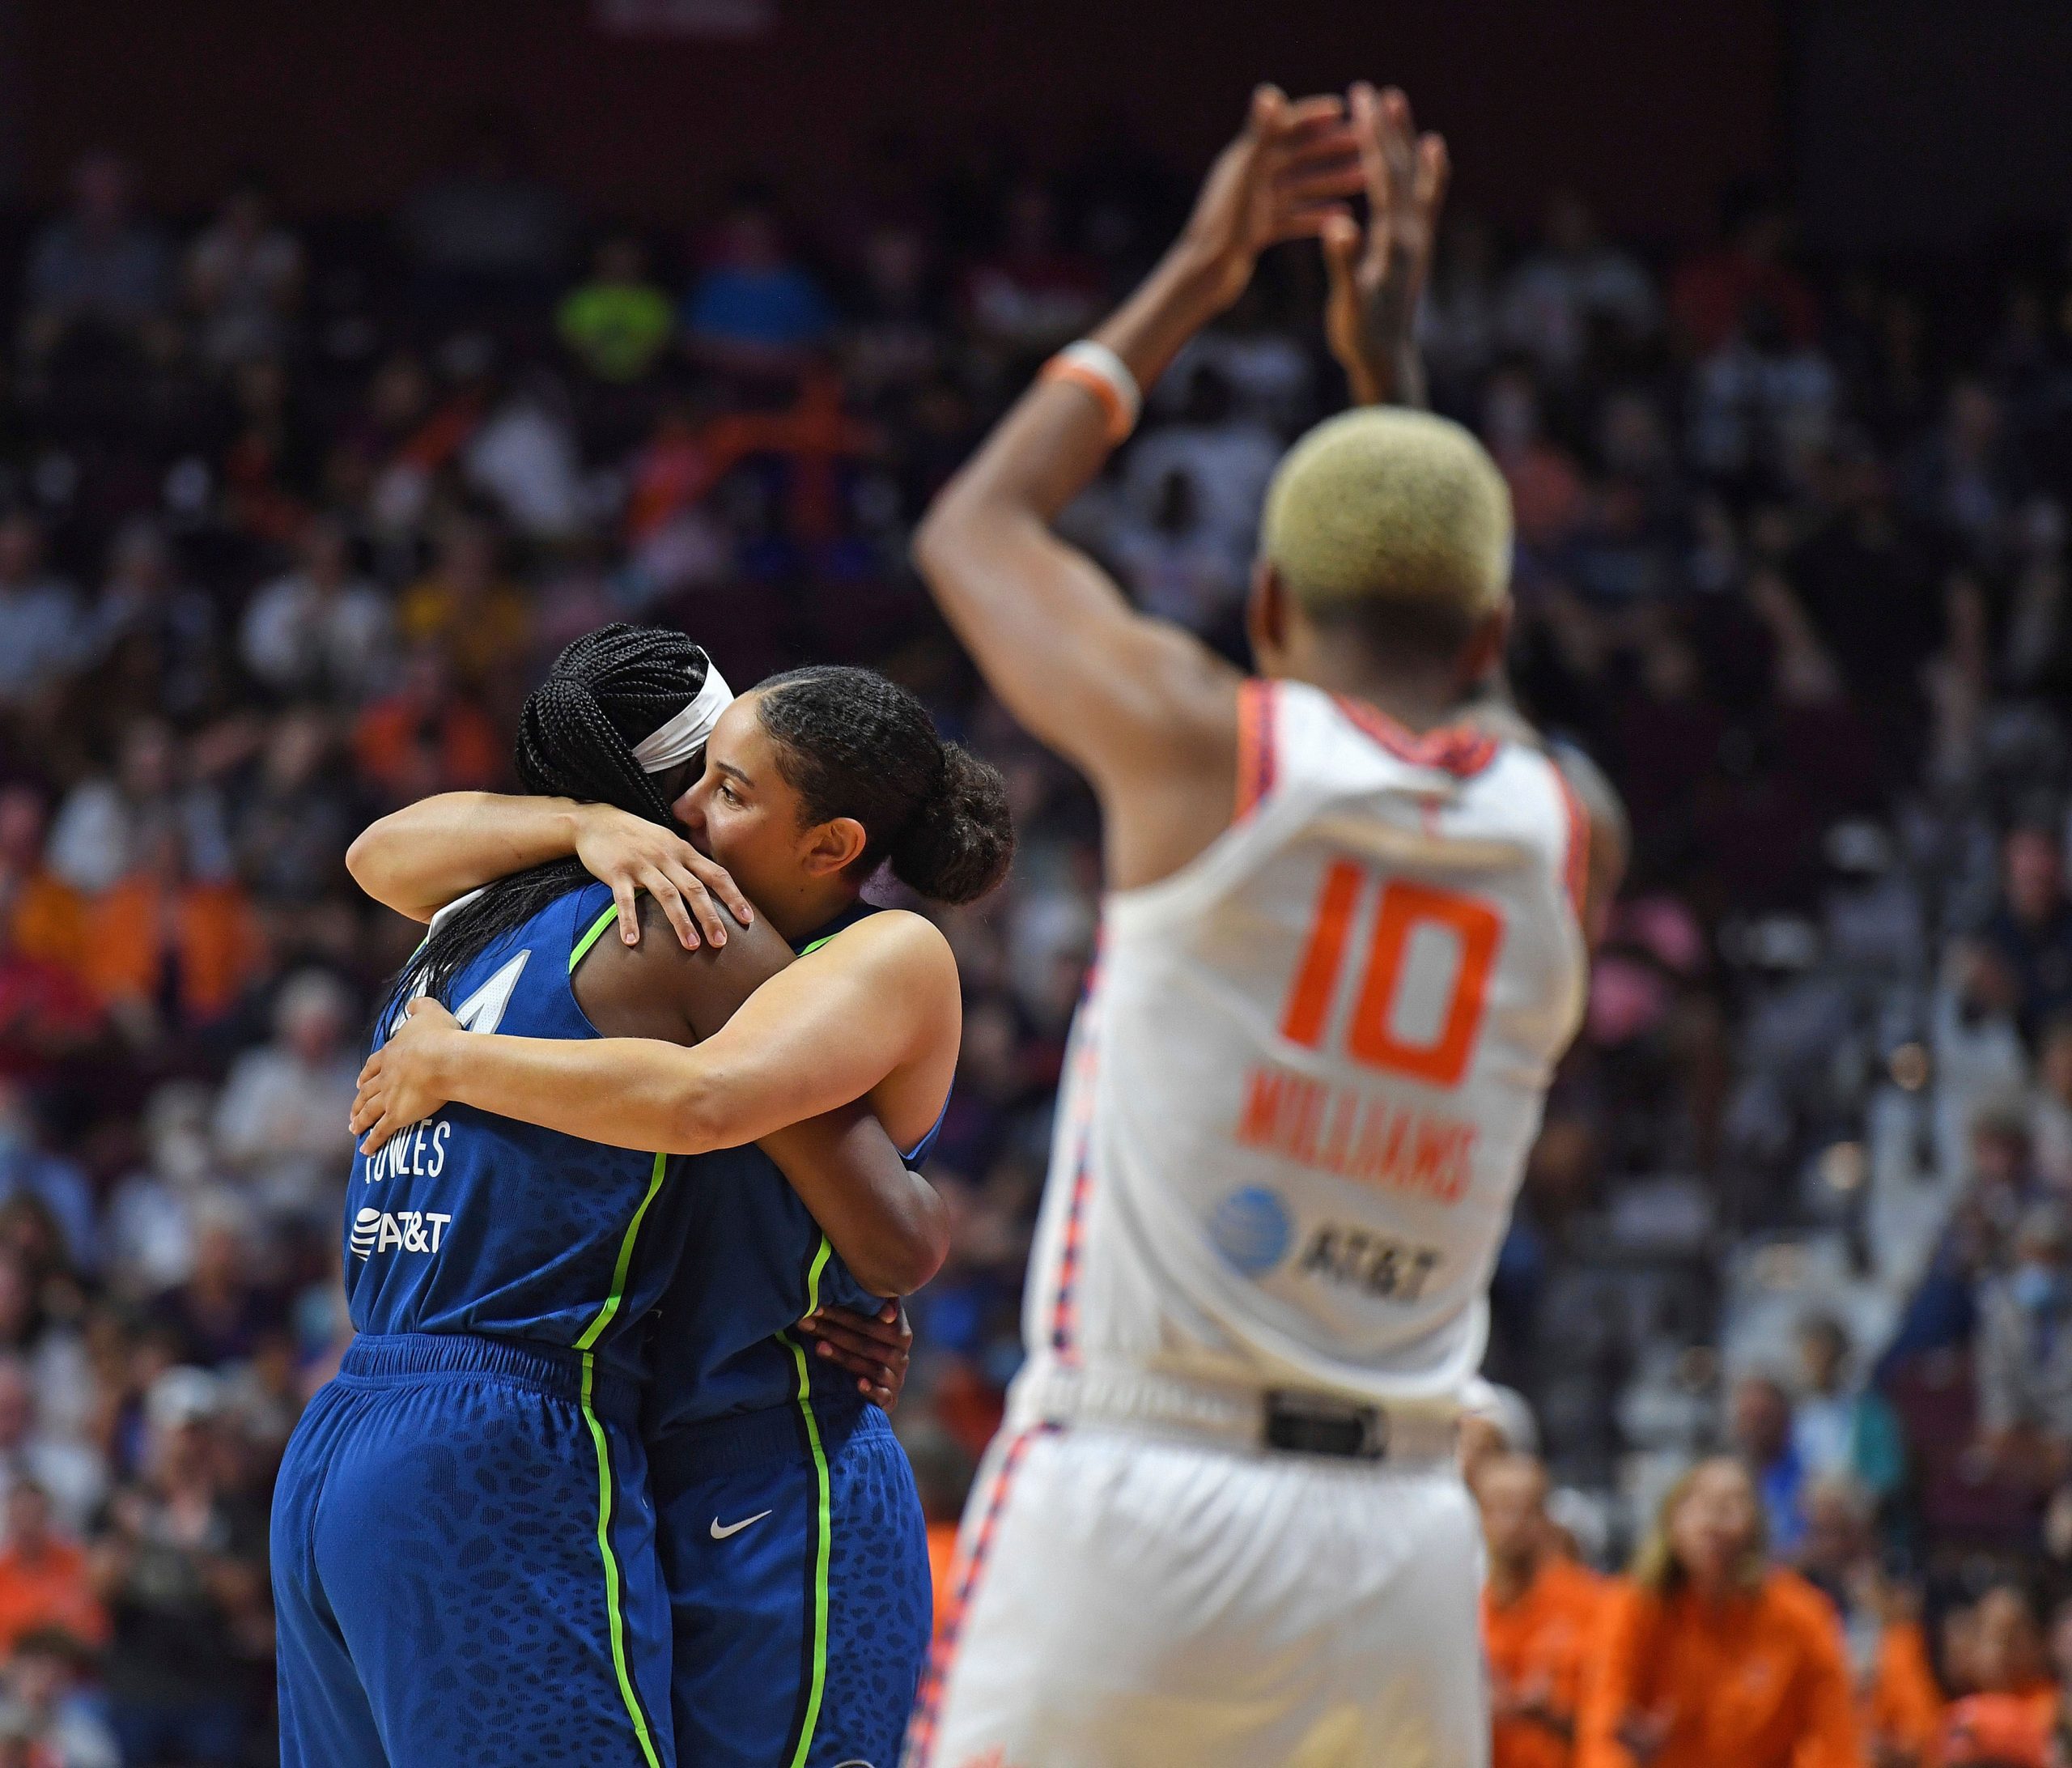 Sylvia Fowles wraps up WNBA career 4K rebounds, emotional goodbye